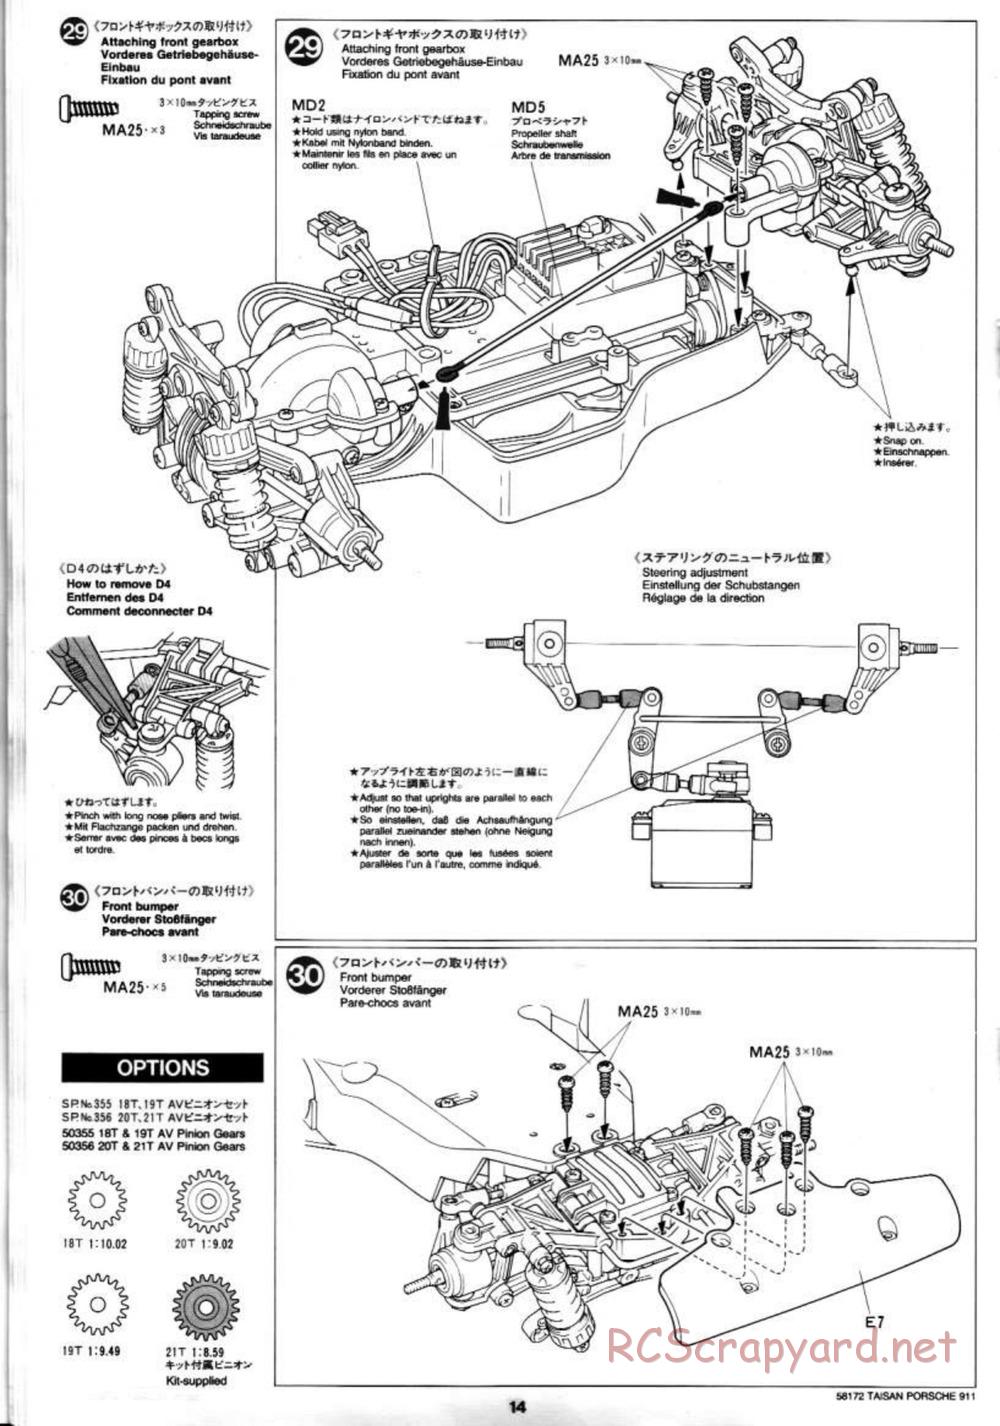 Tamiya - Taisan Starcard Porsche 911 GT2 - TA-02SW Chassis - Manual - Page 14